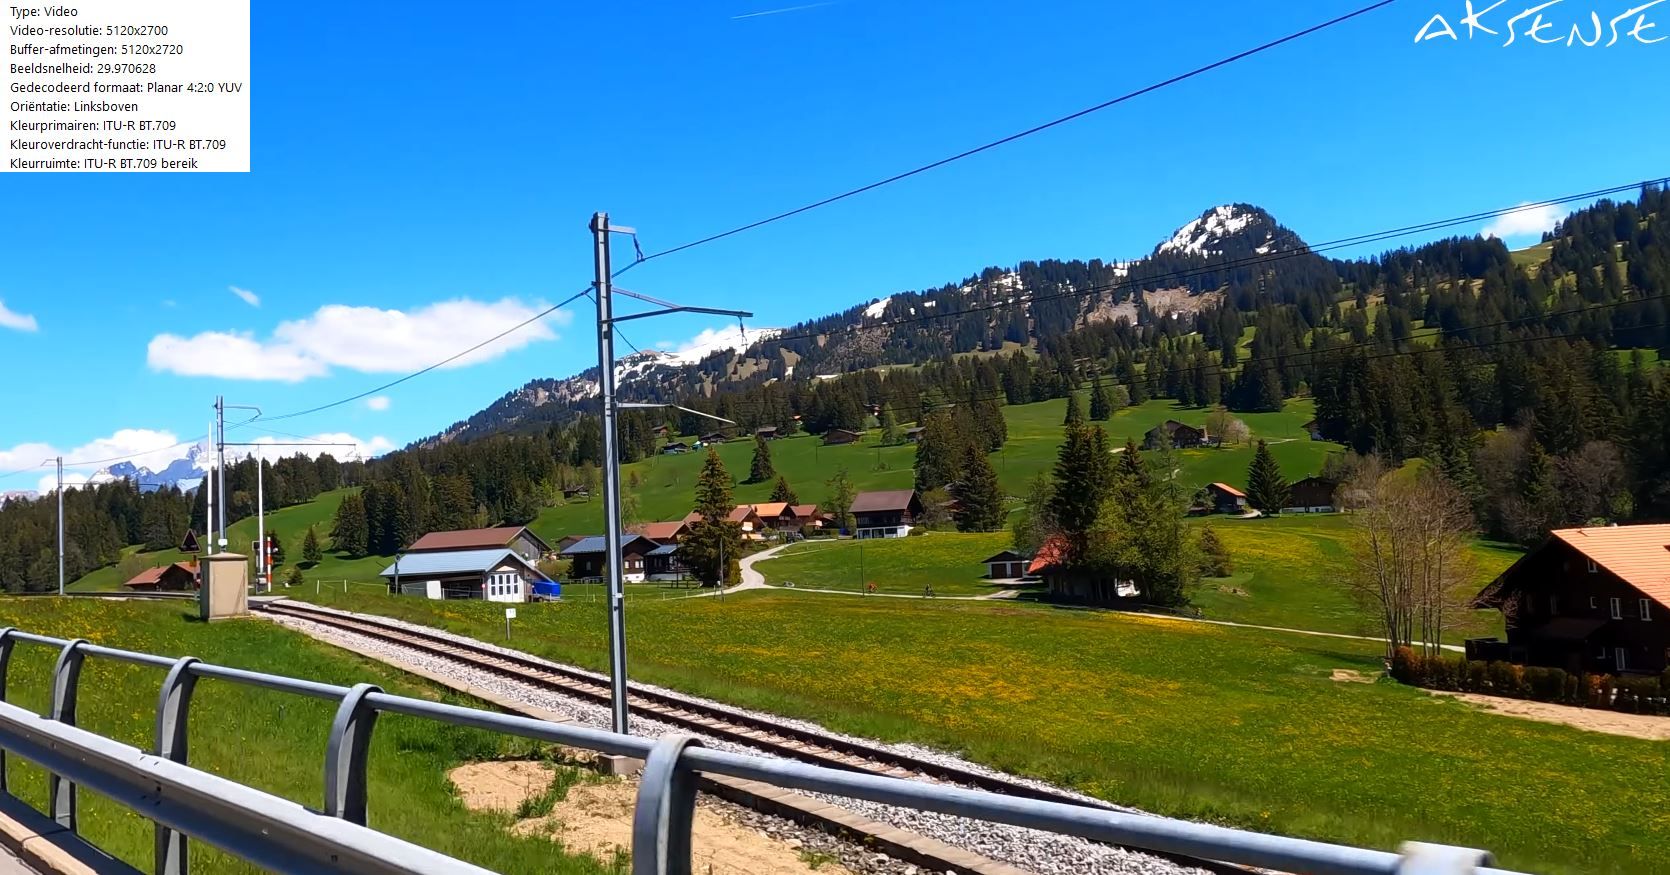 Fairytale-like Switzerland Between GSTAAD and Spiez villages 4K